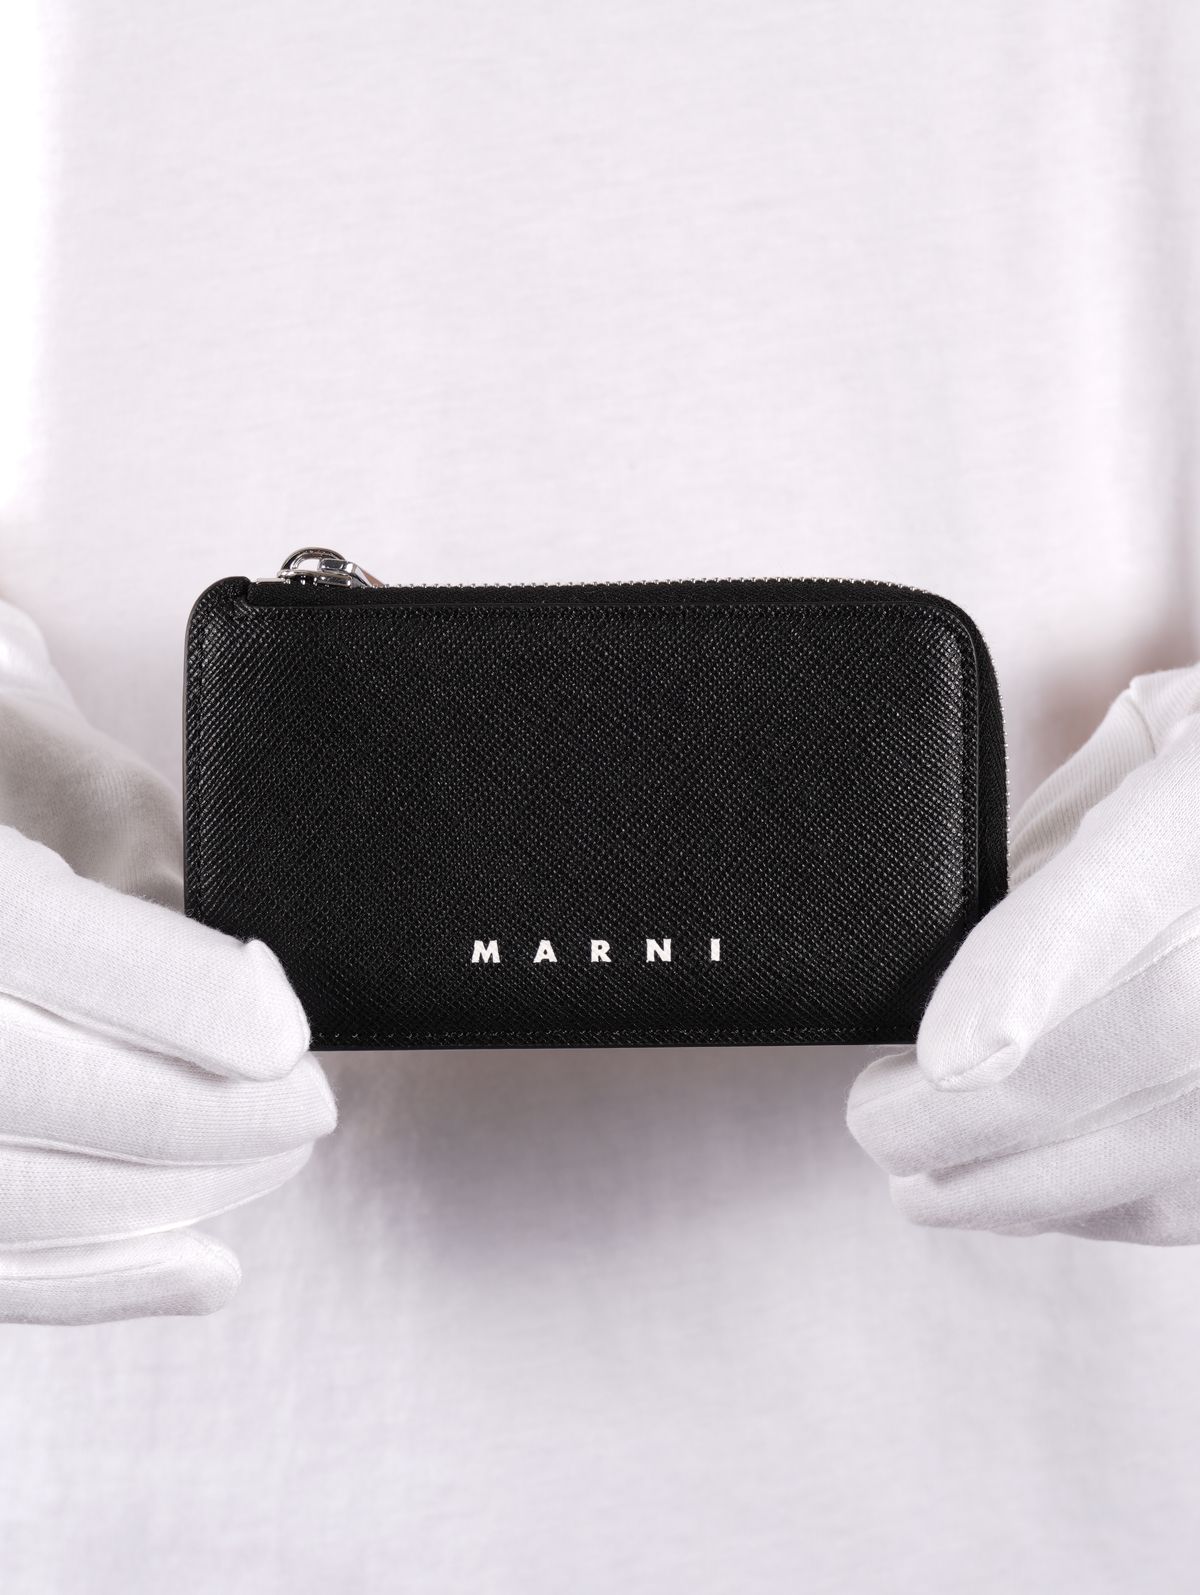 MARNI - 【ラスト1点】COIN CARD CASE / コインケース / カードケース 